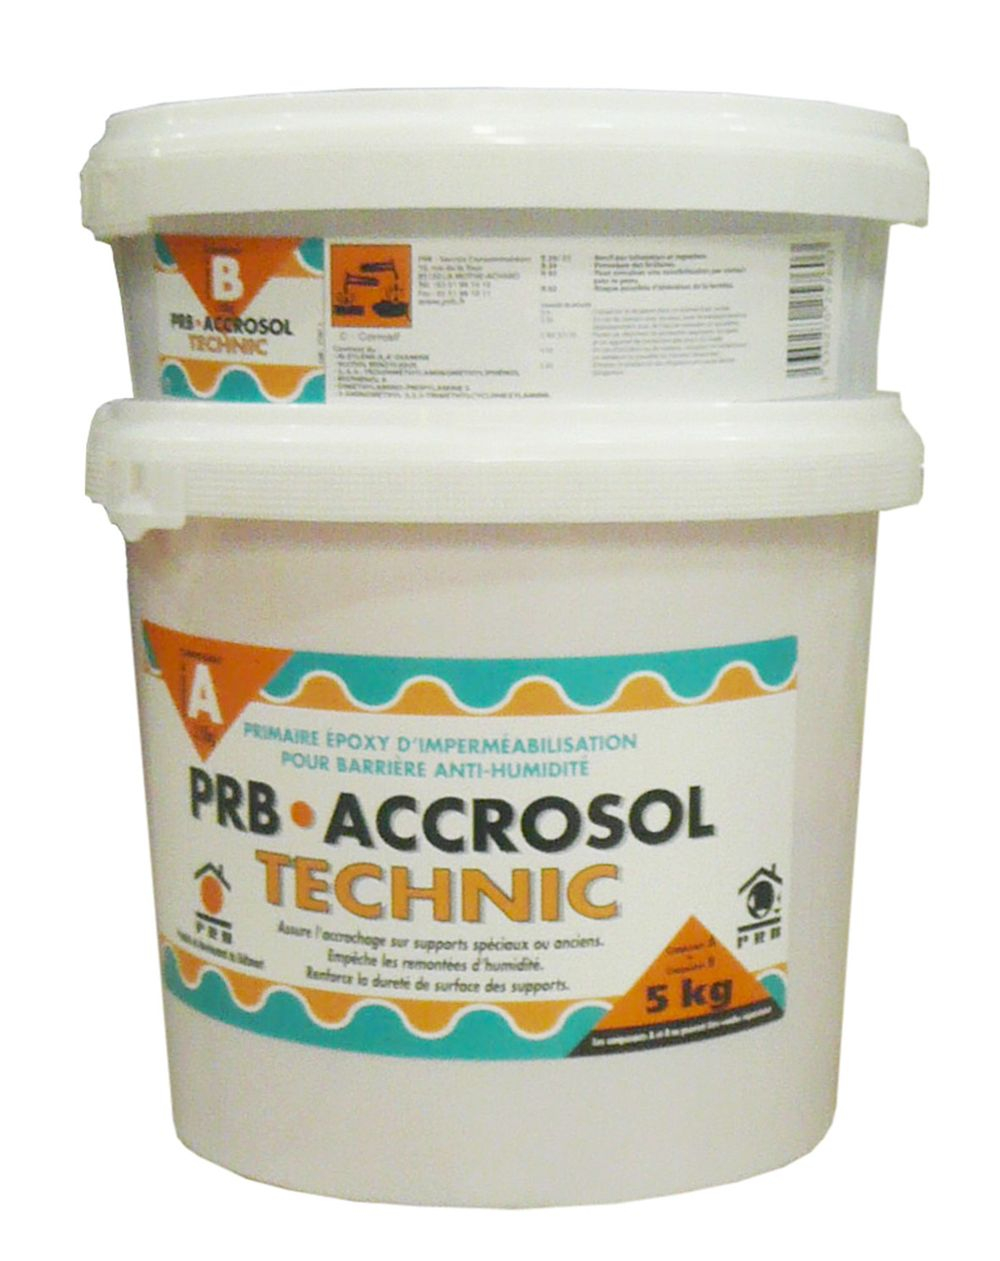 primaire-impermeabilisa-consolidat-accrosol-technic-5kg-seau-0